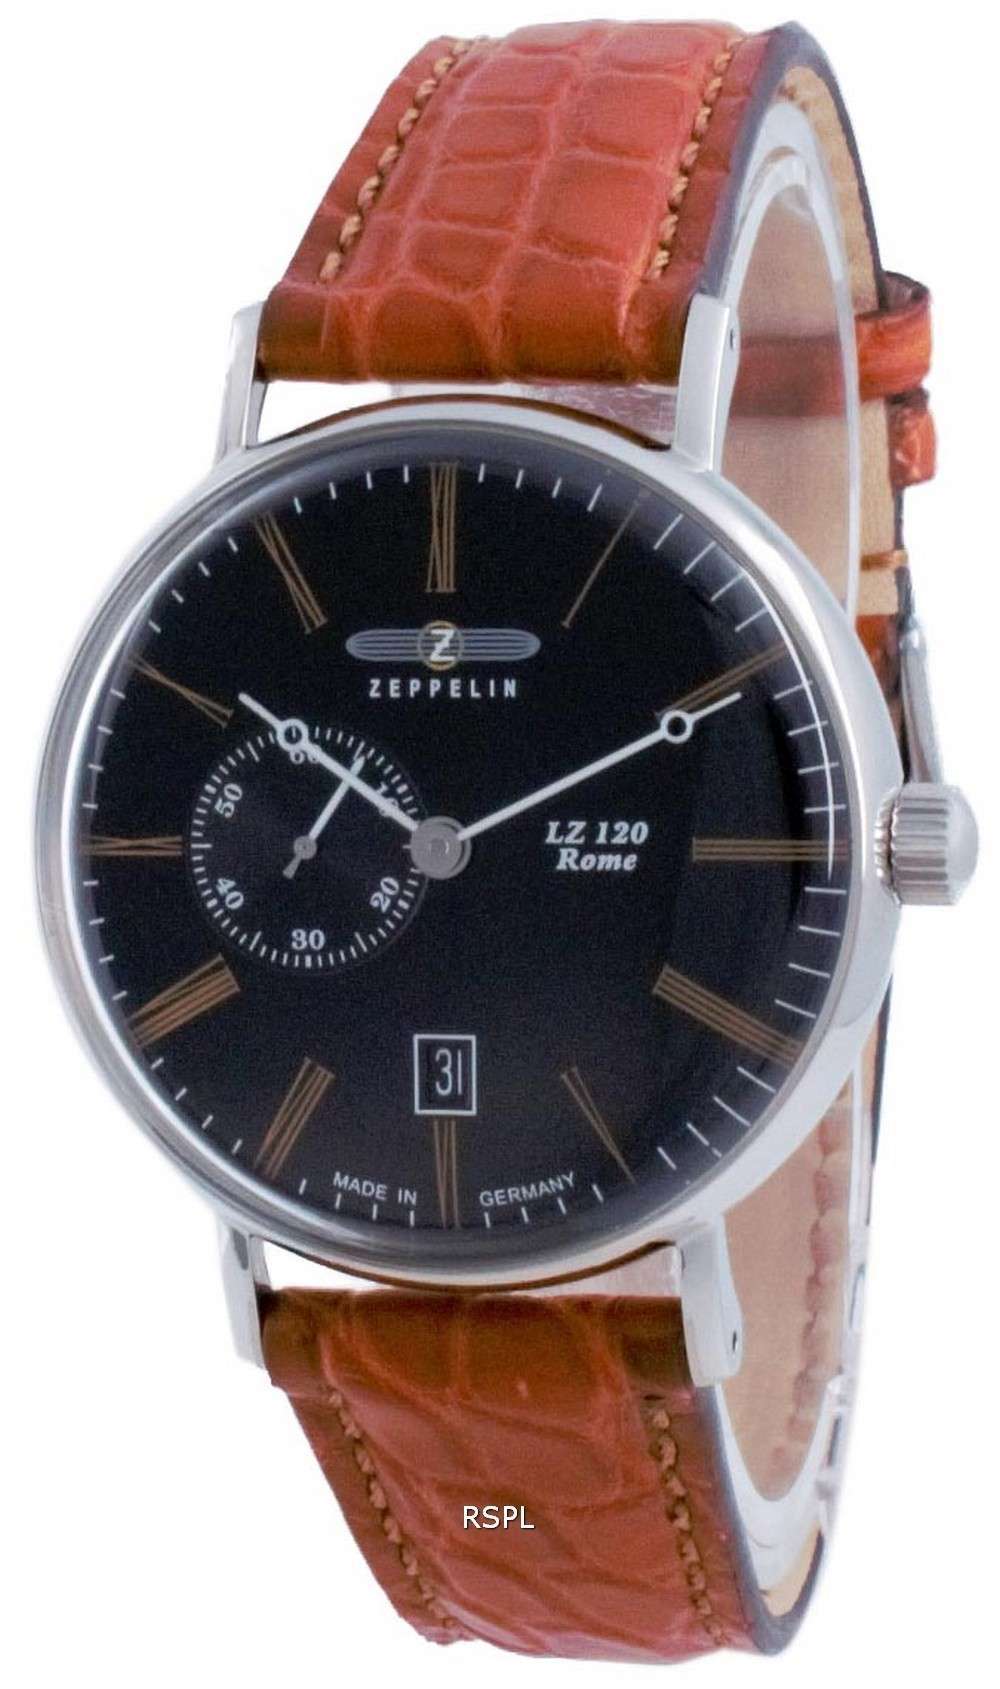 Zeppelin LZ120 Rome Black Dial Automatic 7104-2 71042 Reloj para hombre